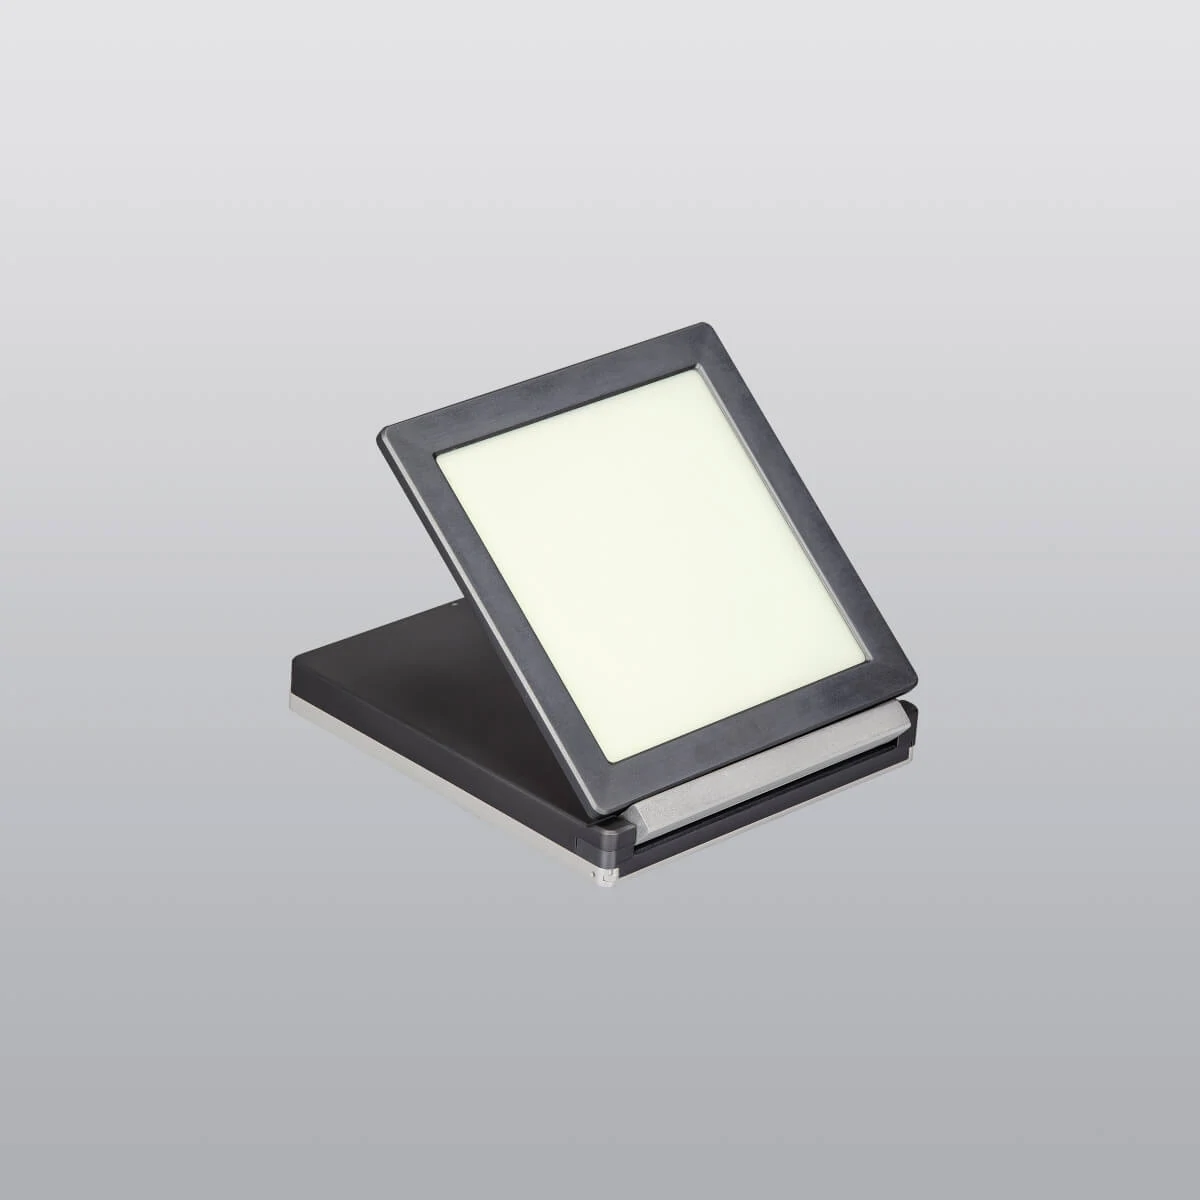 OLED luminaire SquareOne from Gamma Illumination